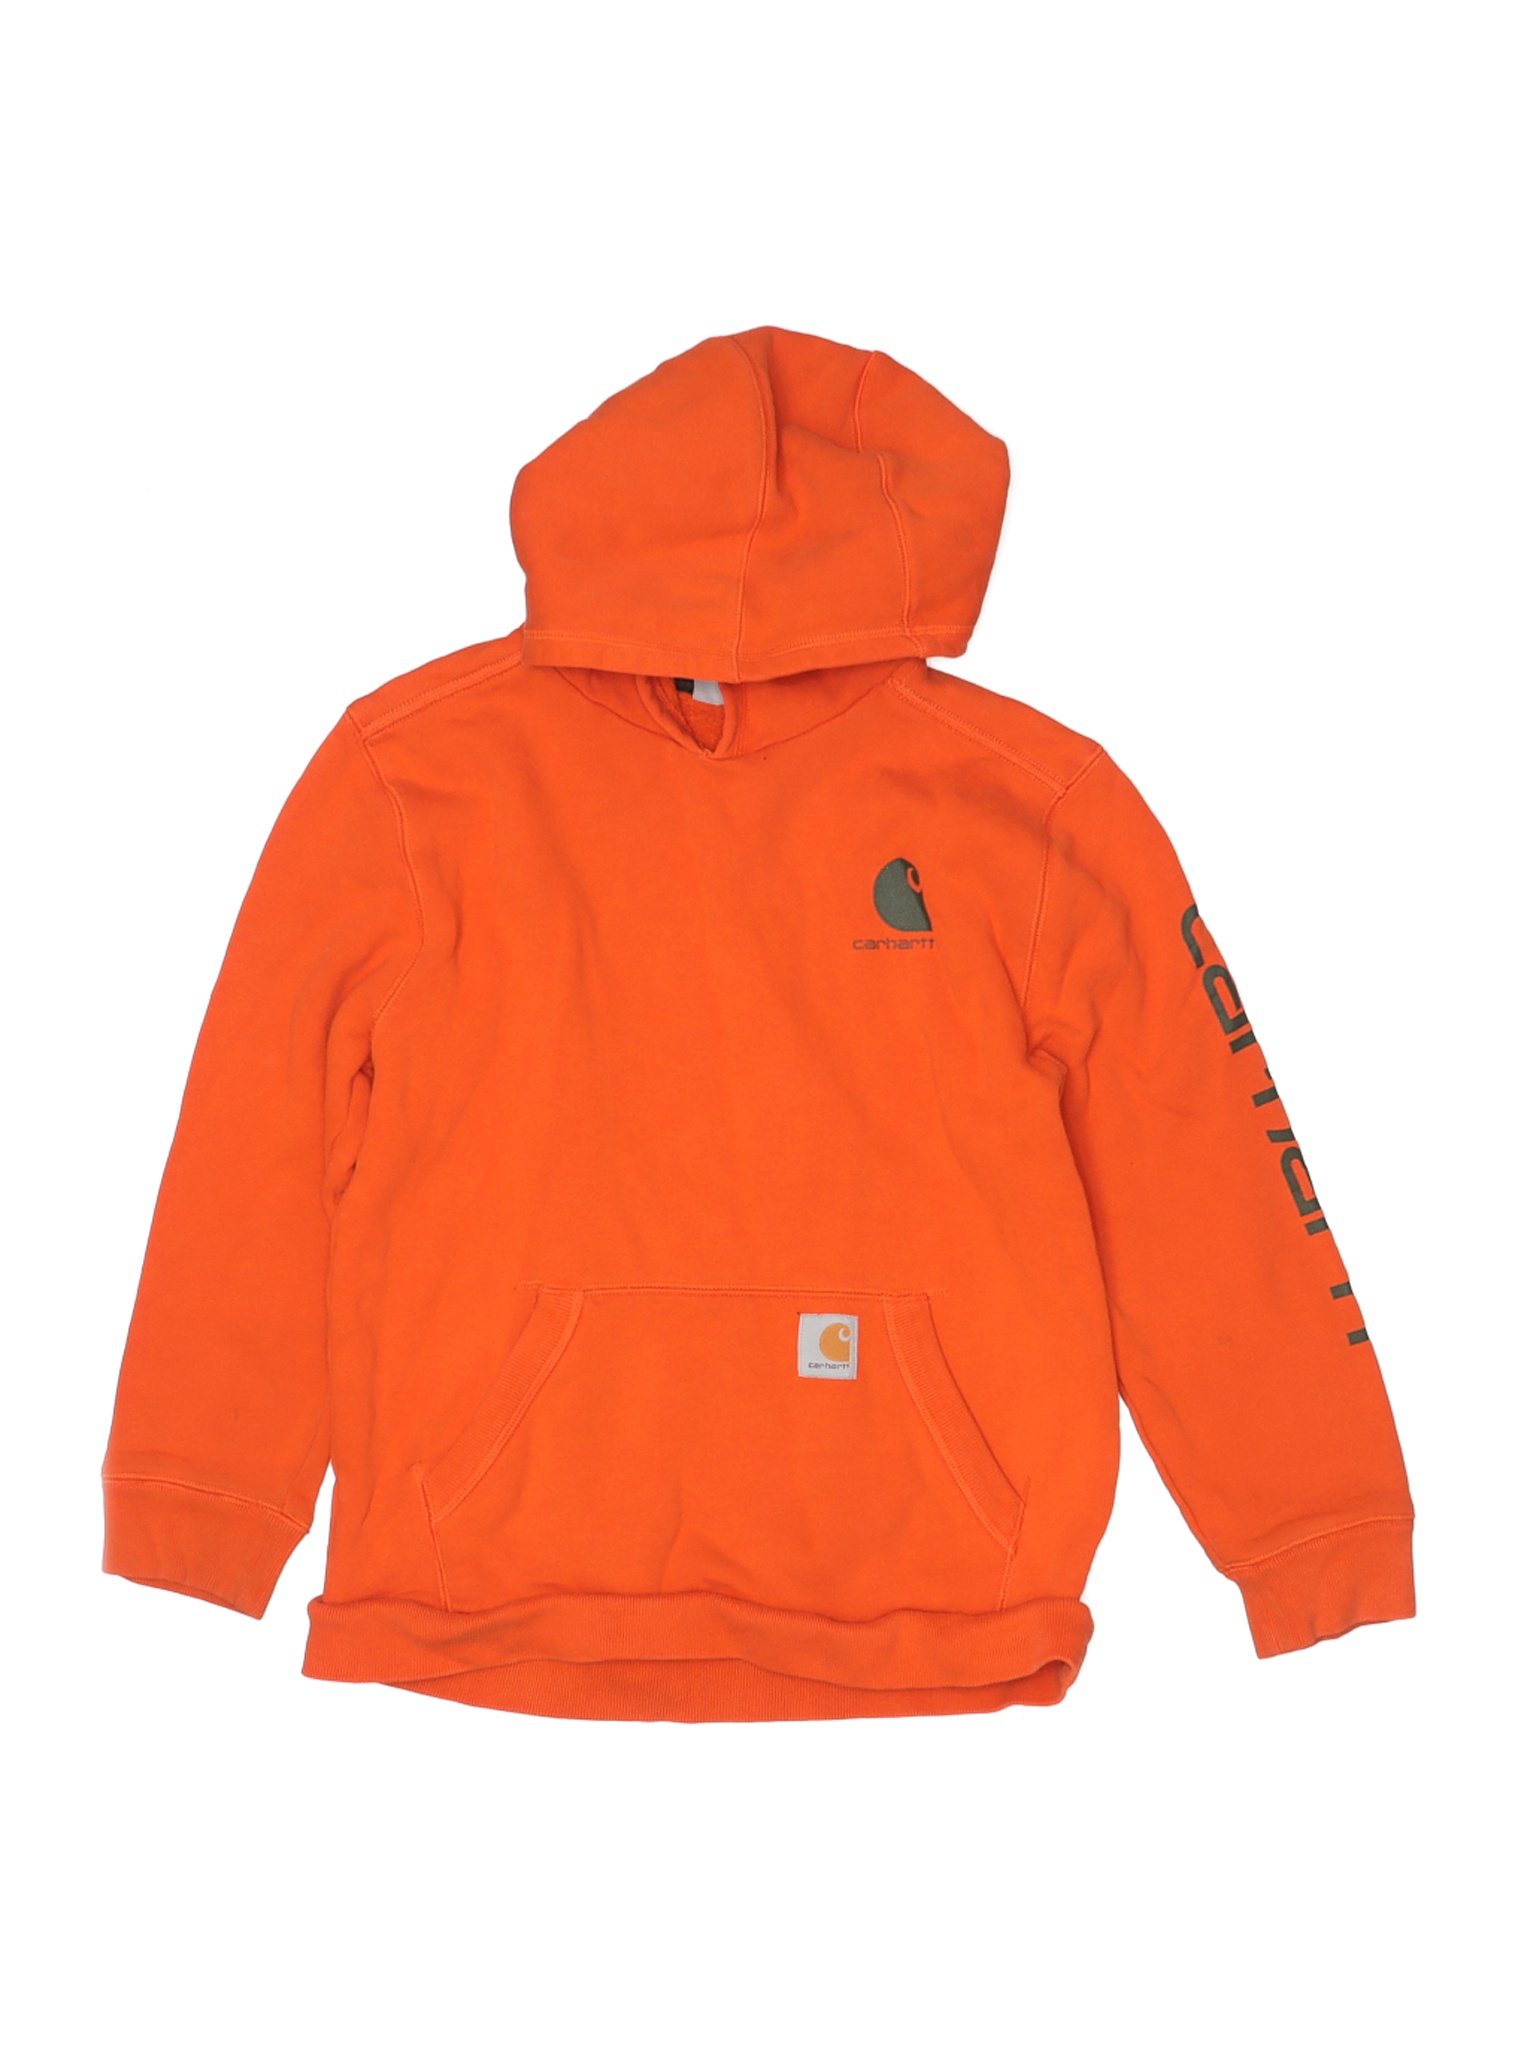 Carhartt Boys Orange Pullover Hoodie 10 | eBay